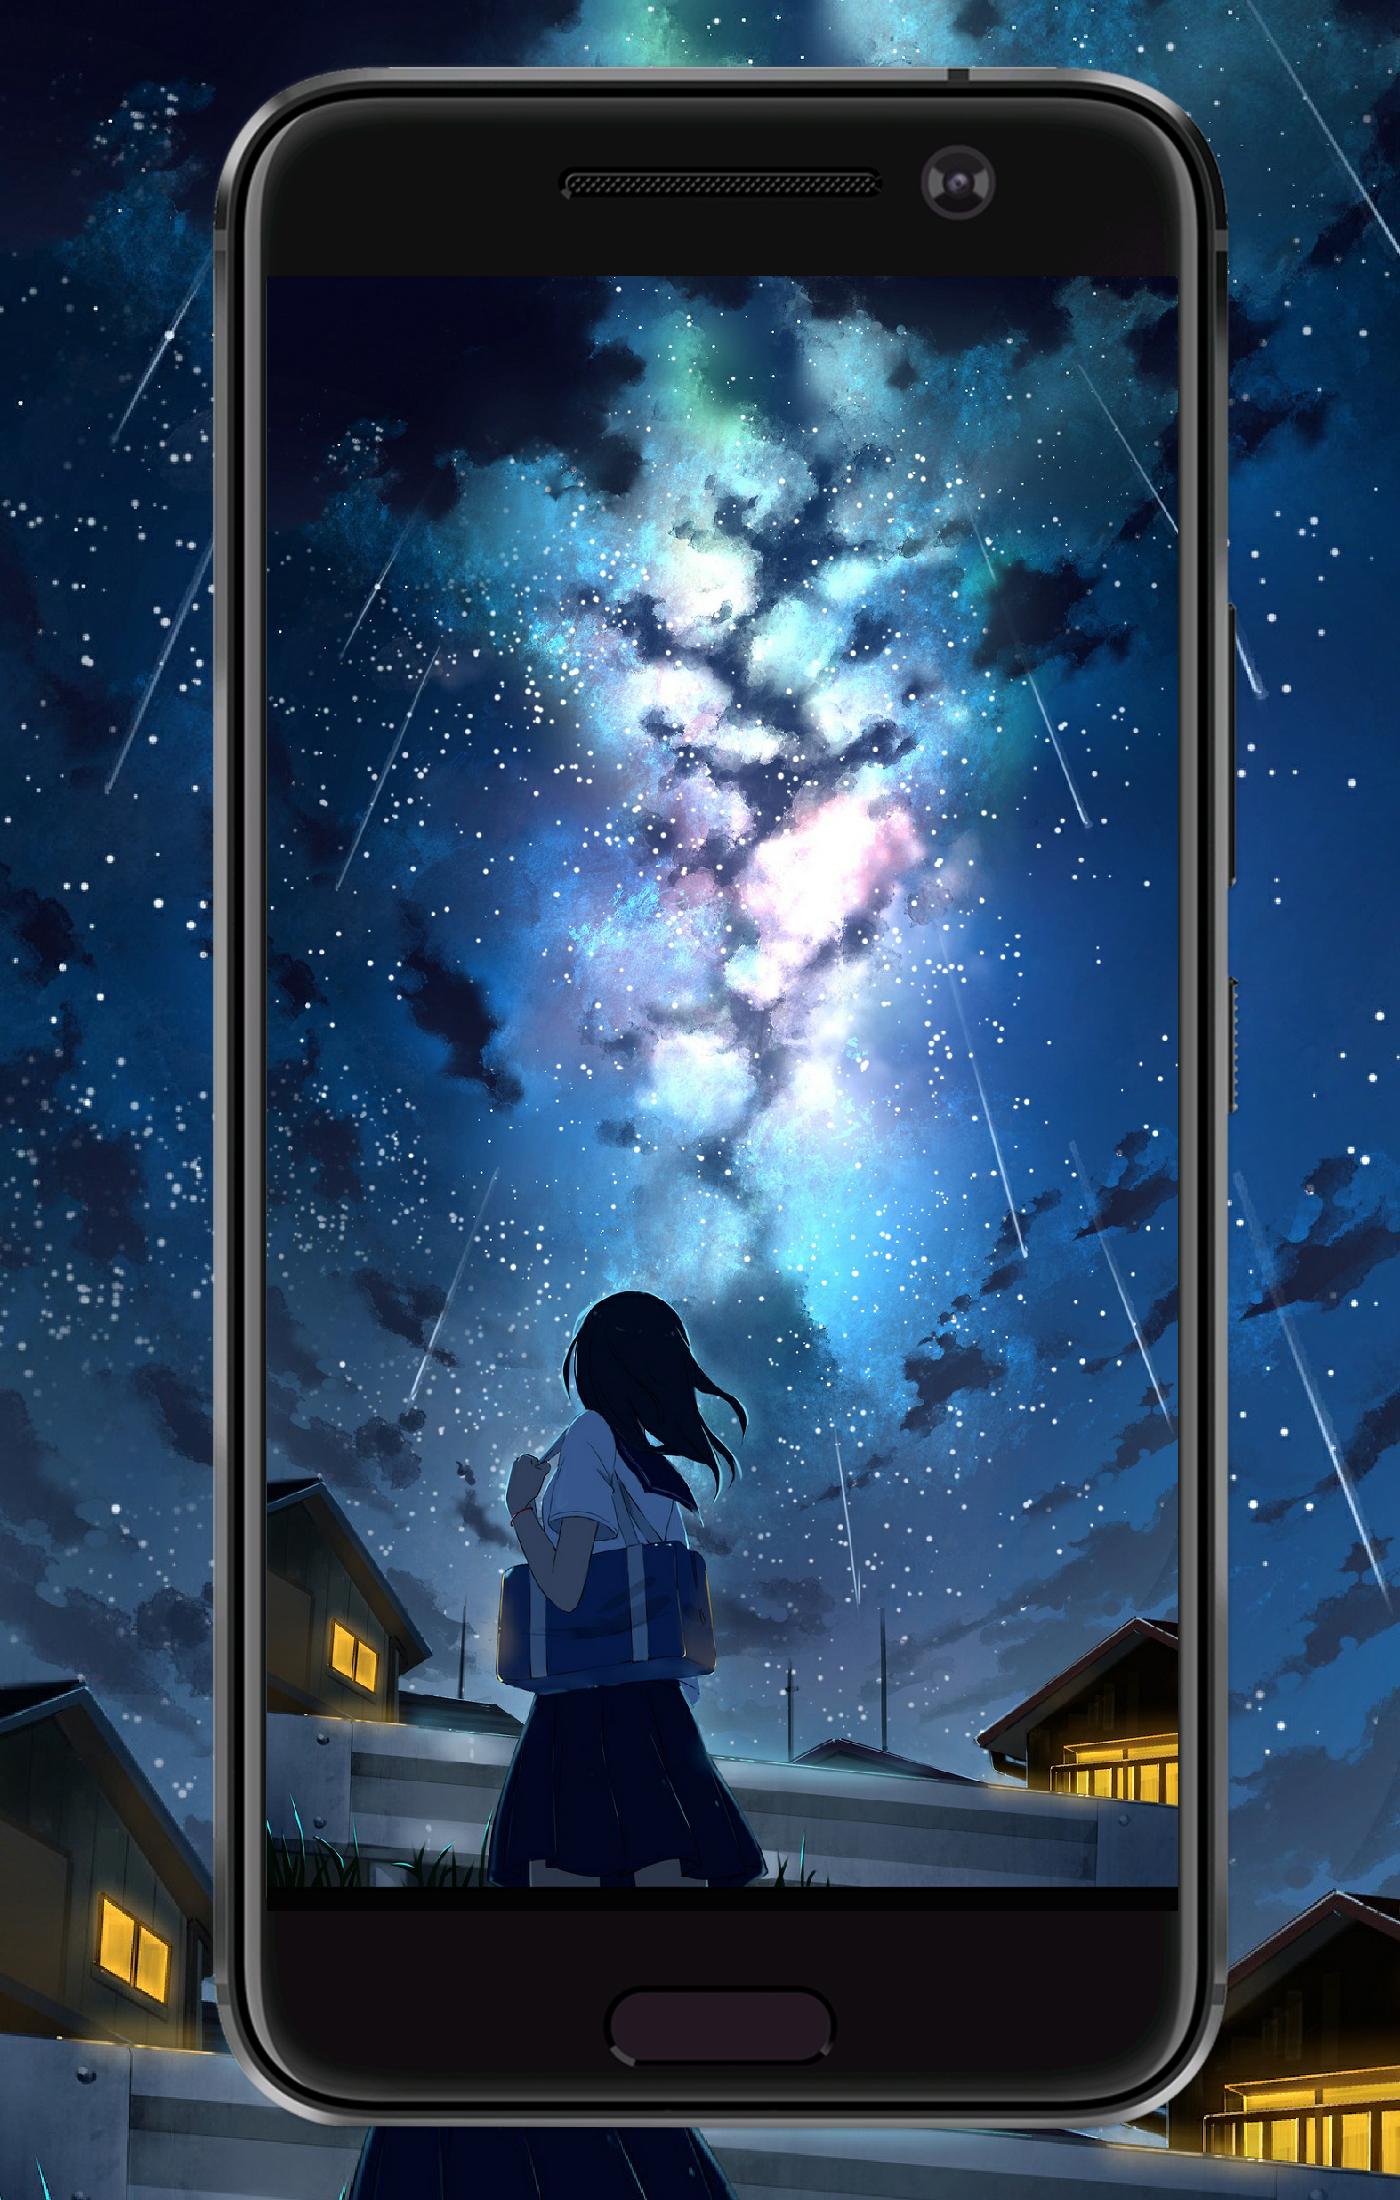 Download Gambar Wallpaper Anime Kimi No Nawa Hd Android terbaru 2020